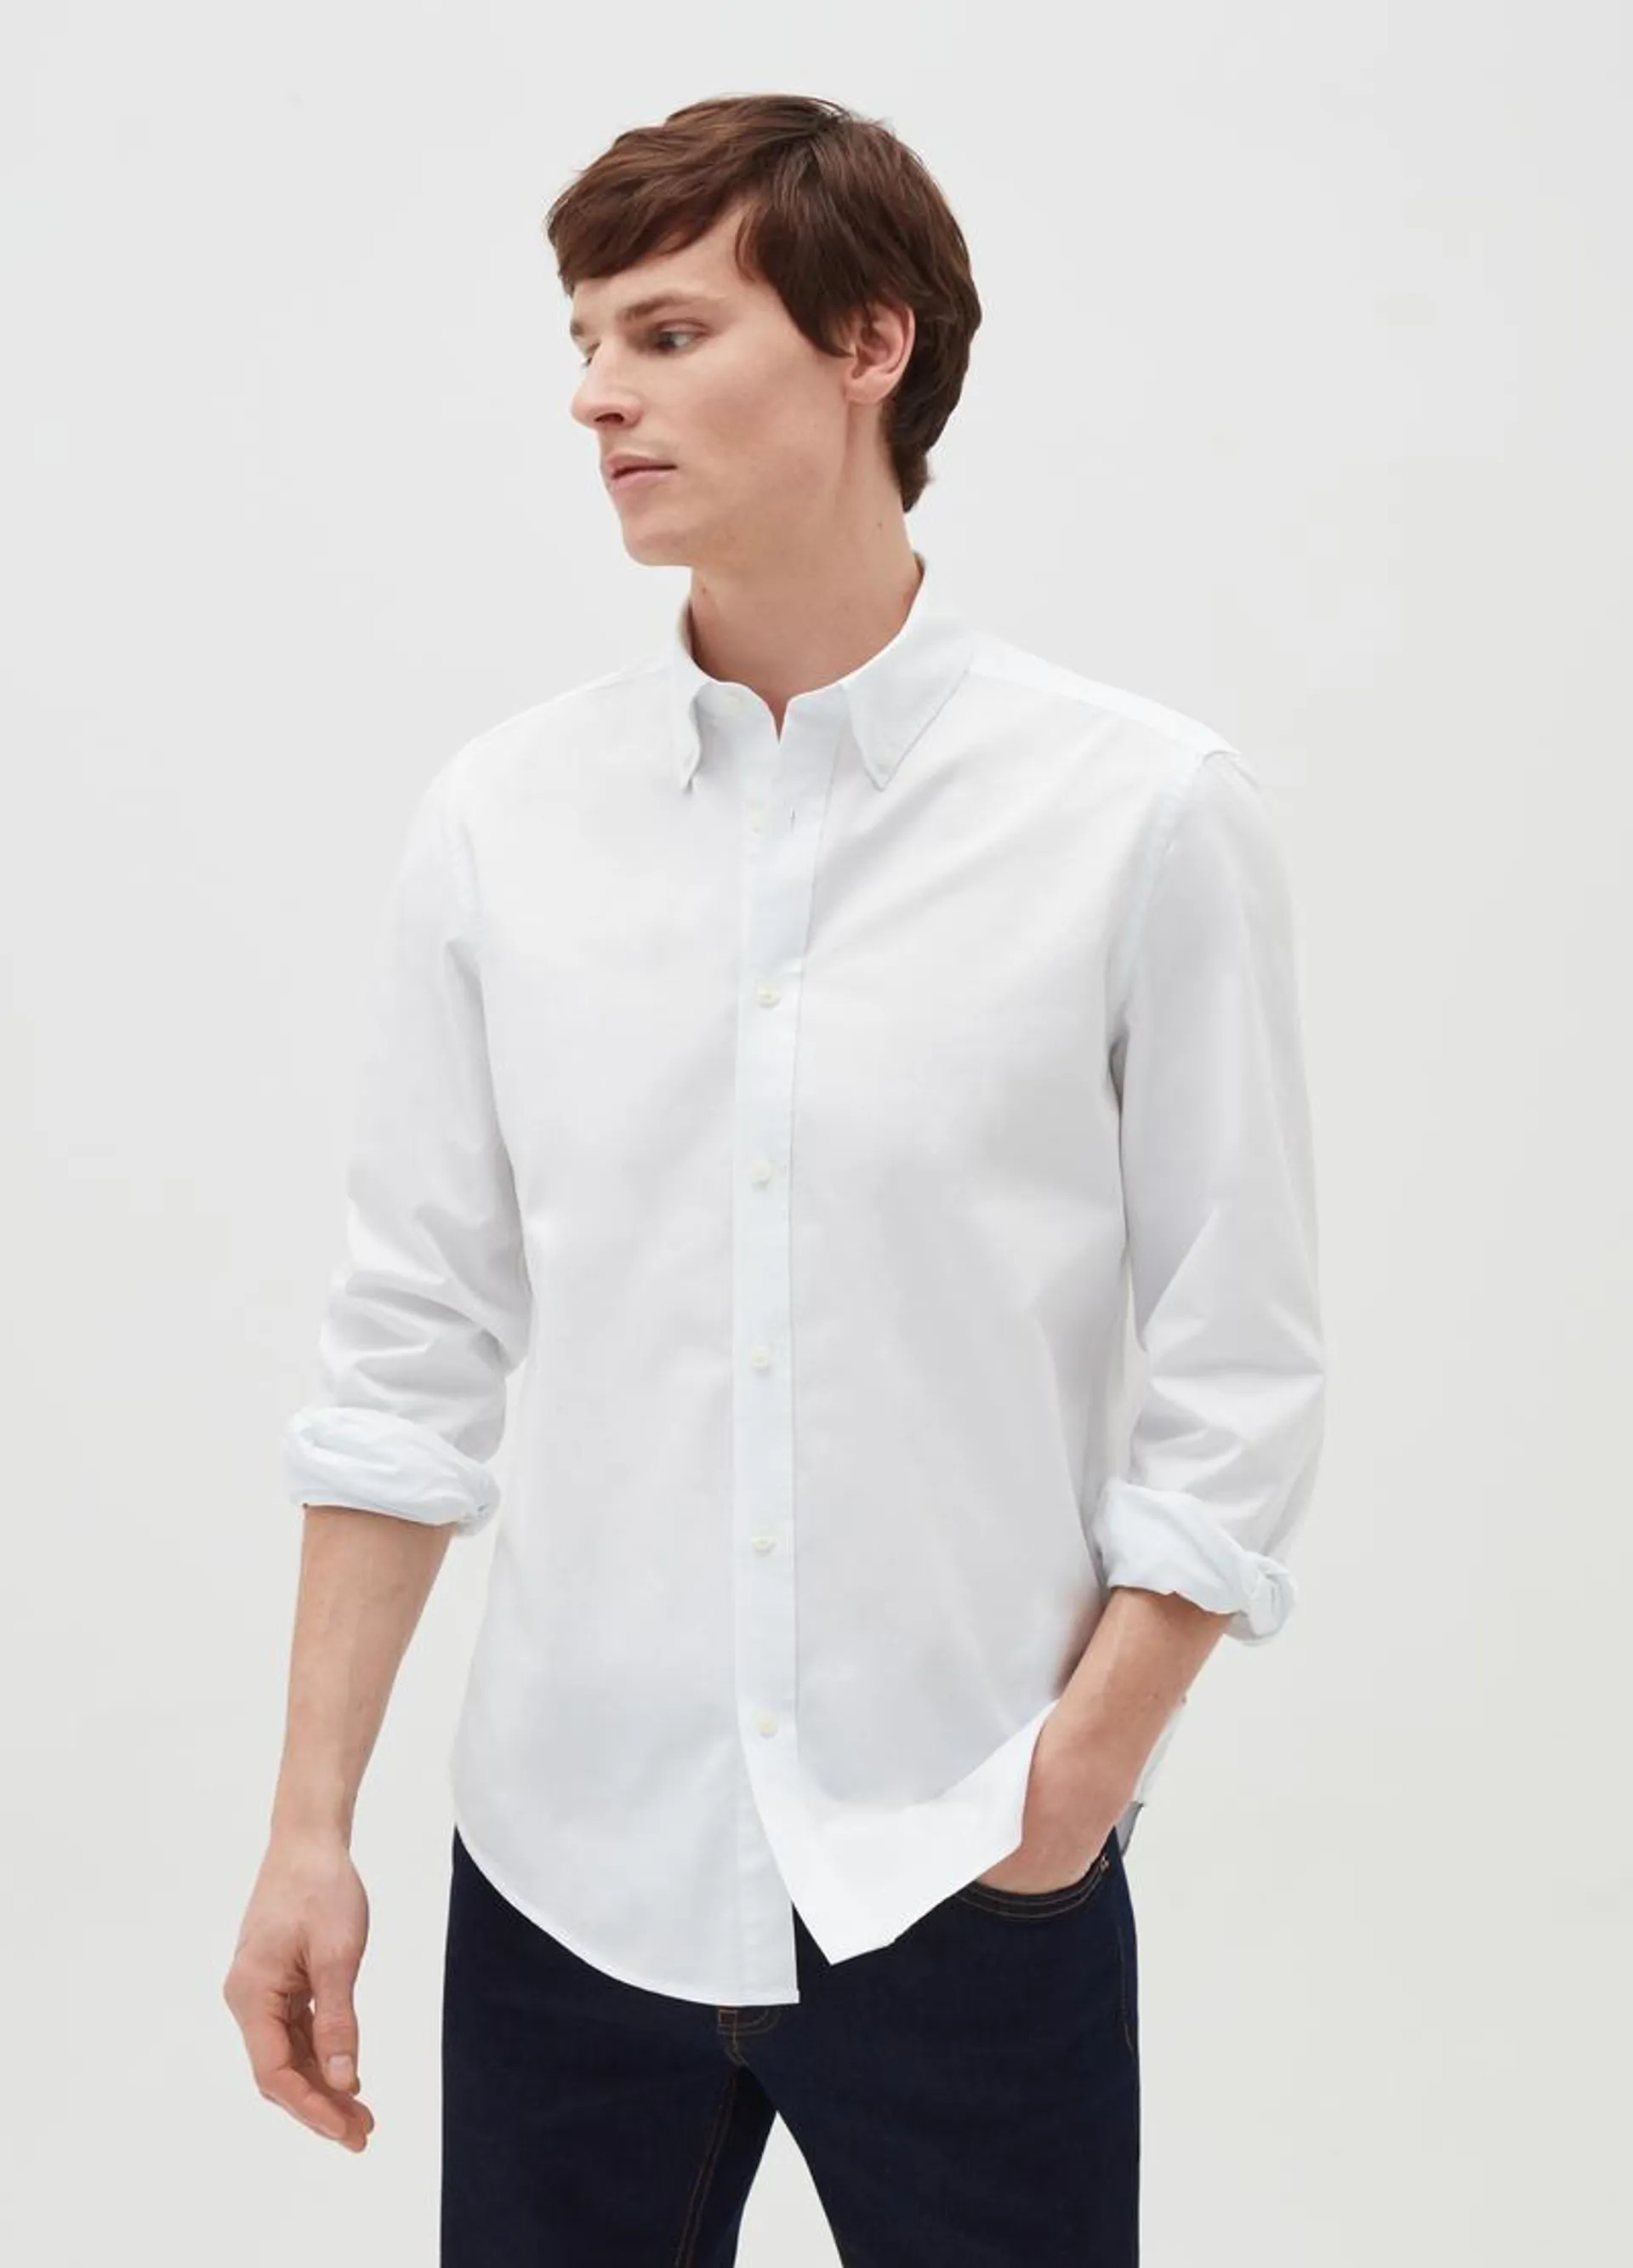 PIOMBO 100% cotton shirt with button-down collar